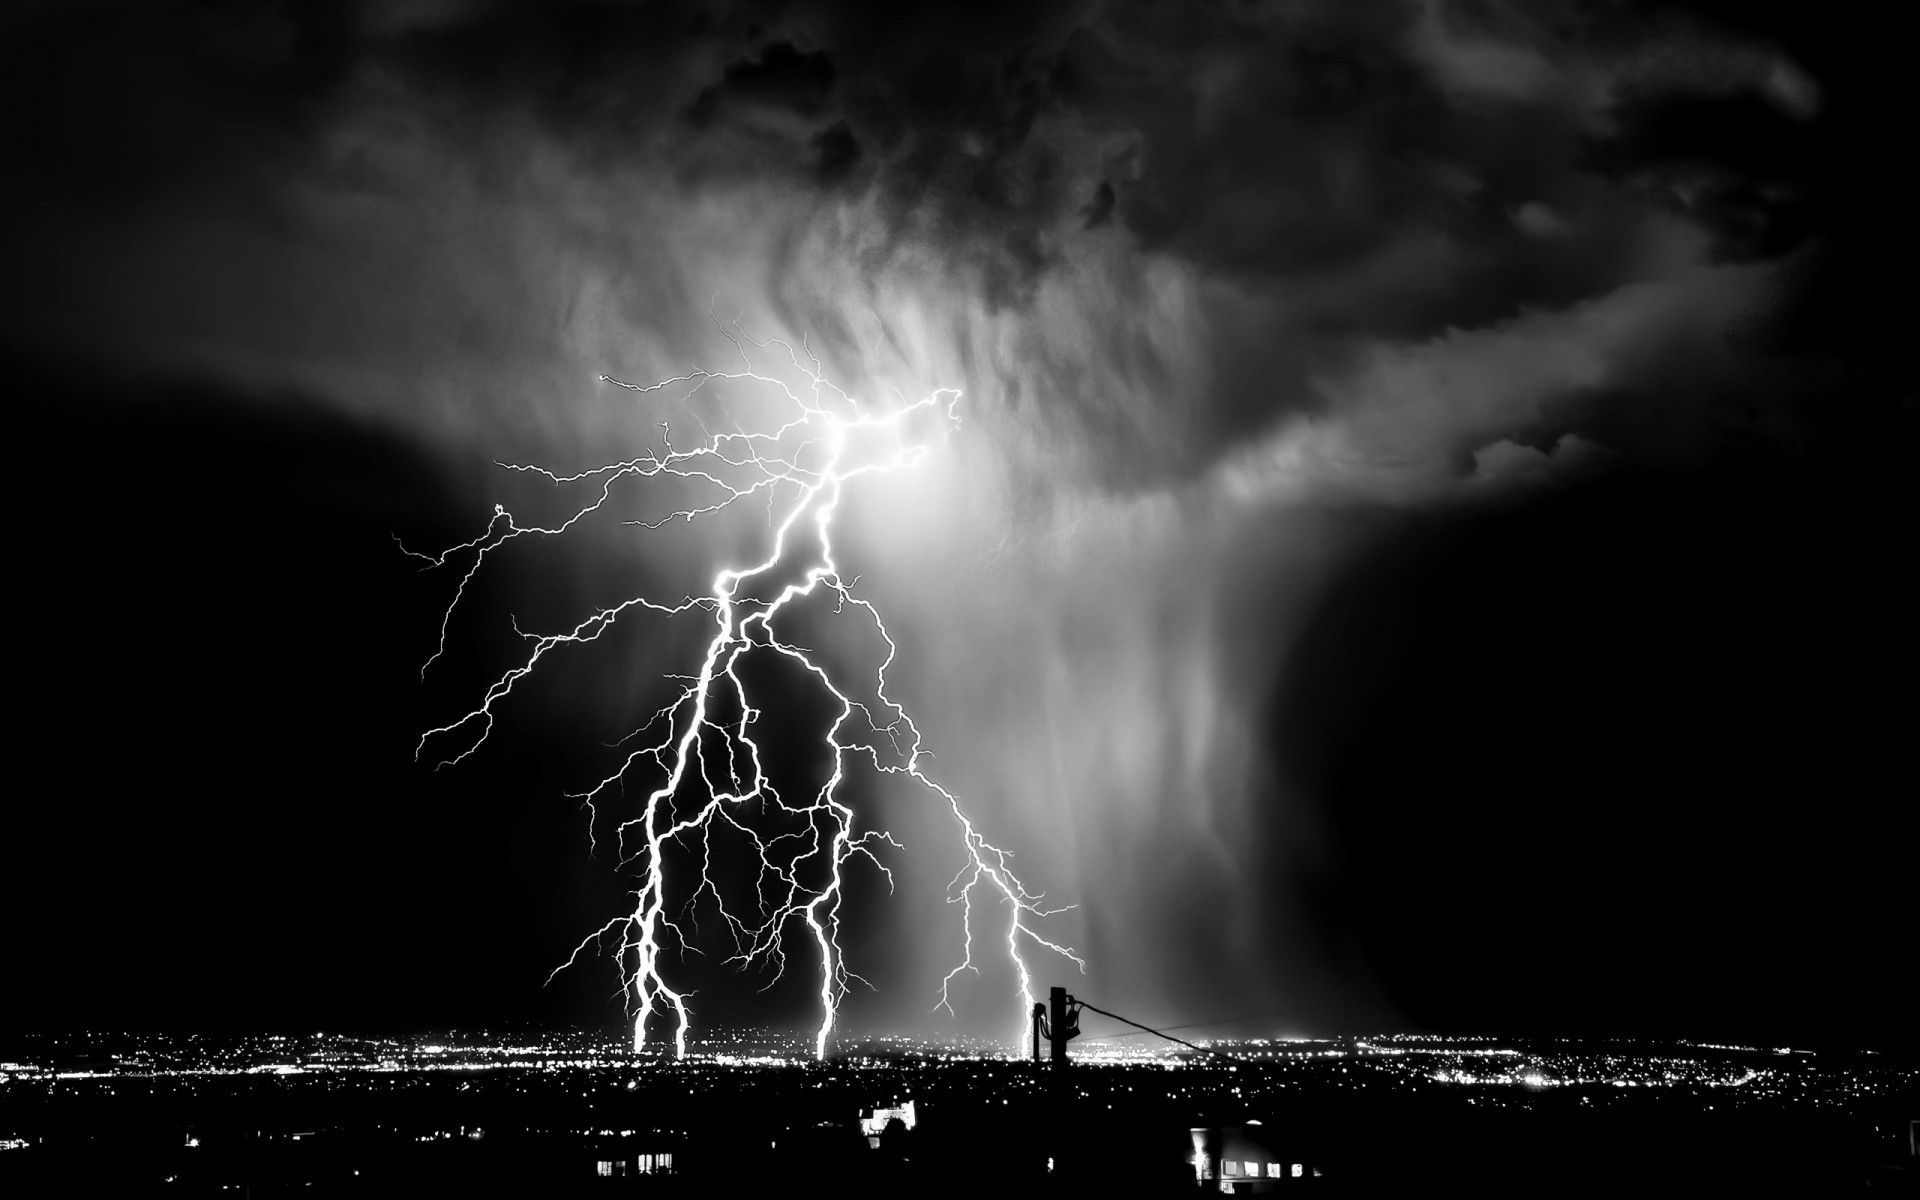 Massive Lightning. Android wallpaper. Lightning photography, Lightning image, Nature